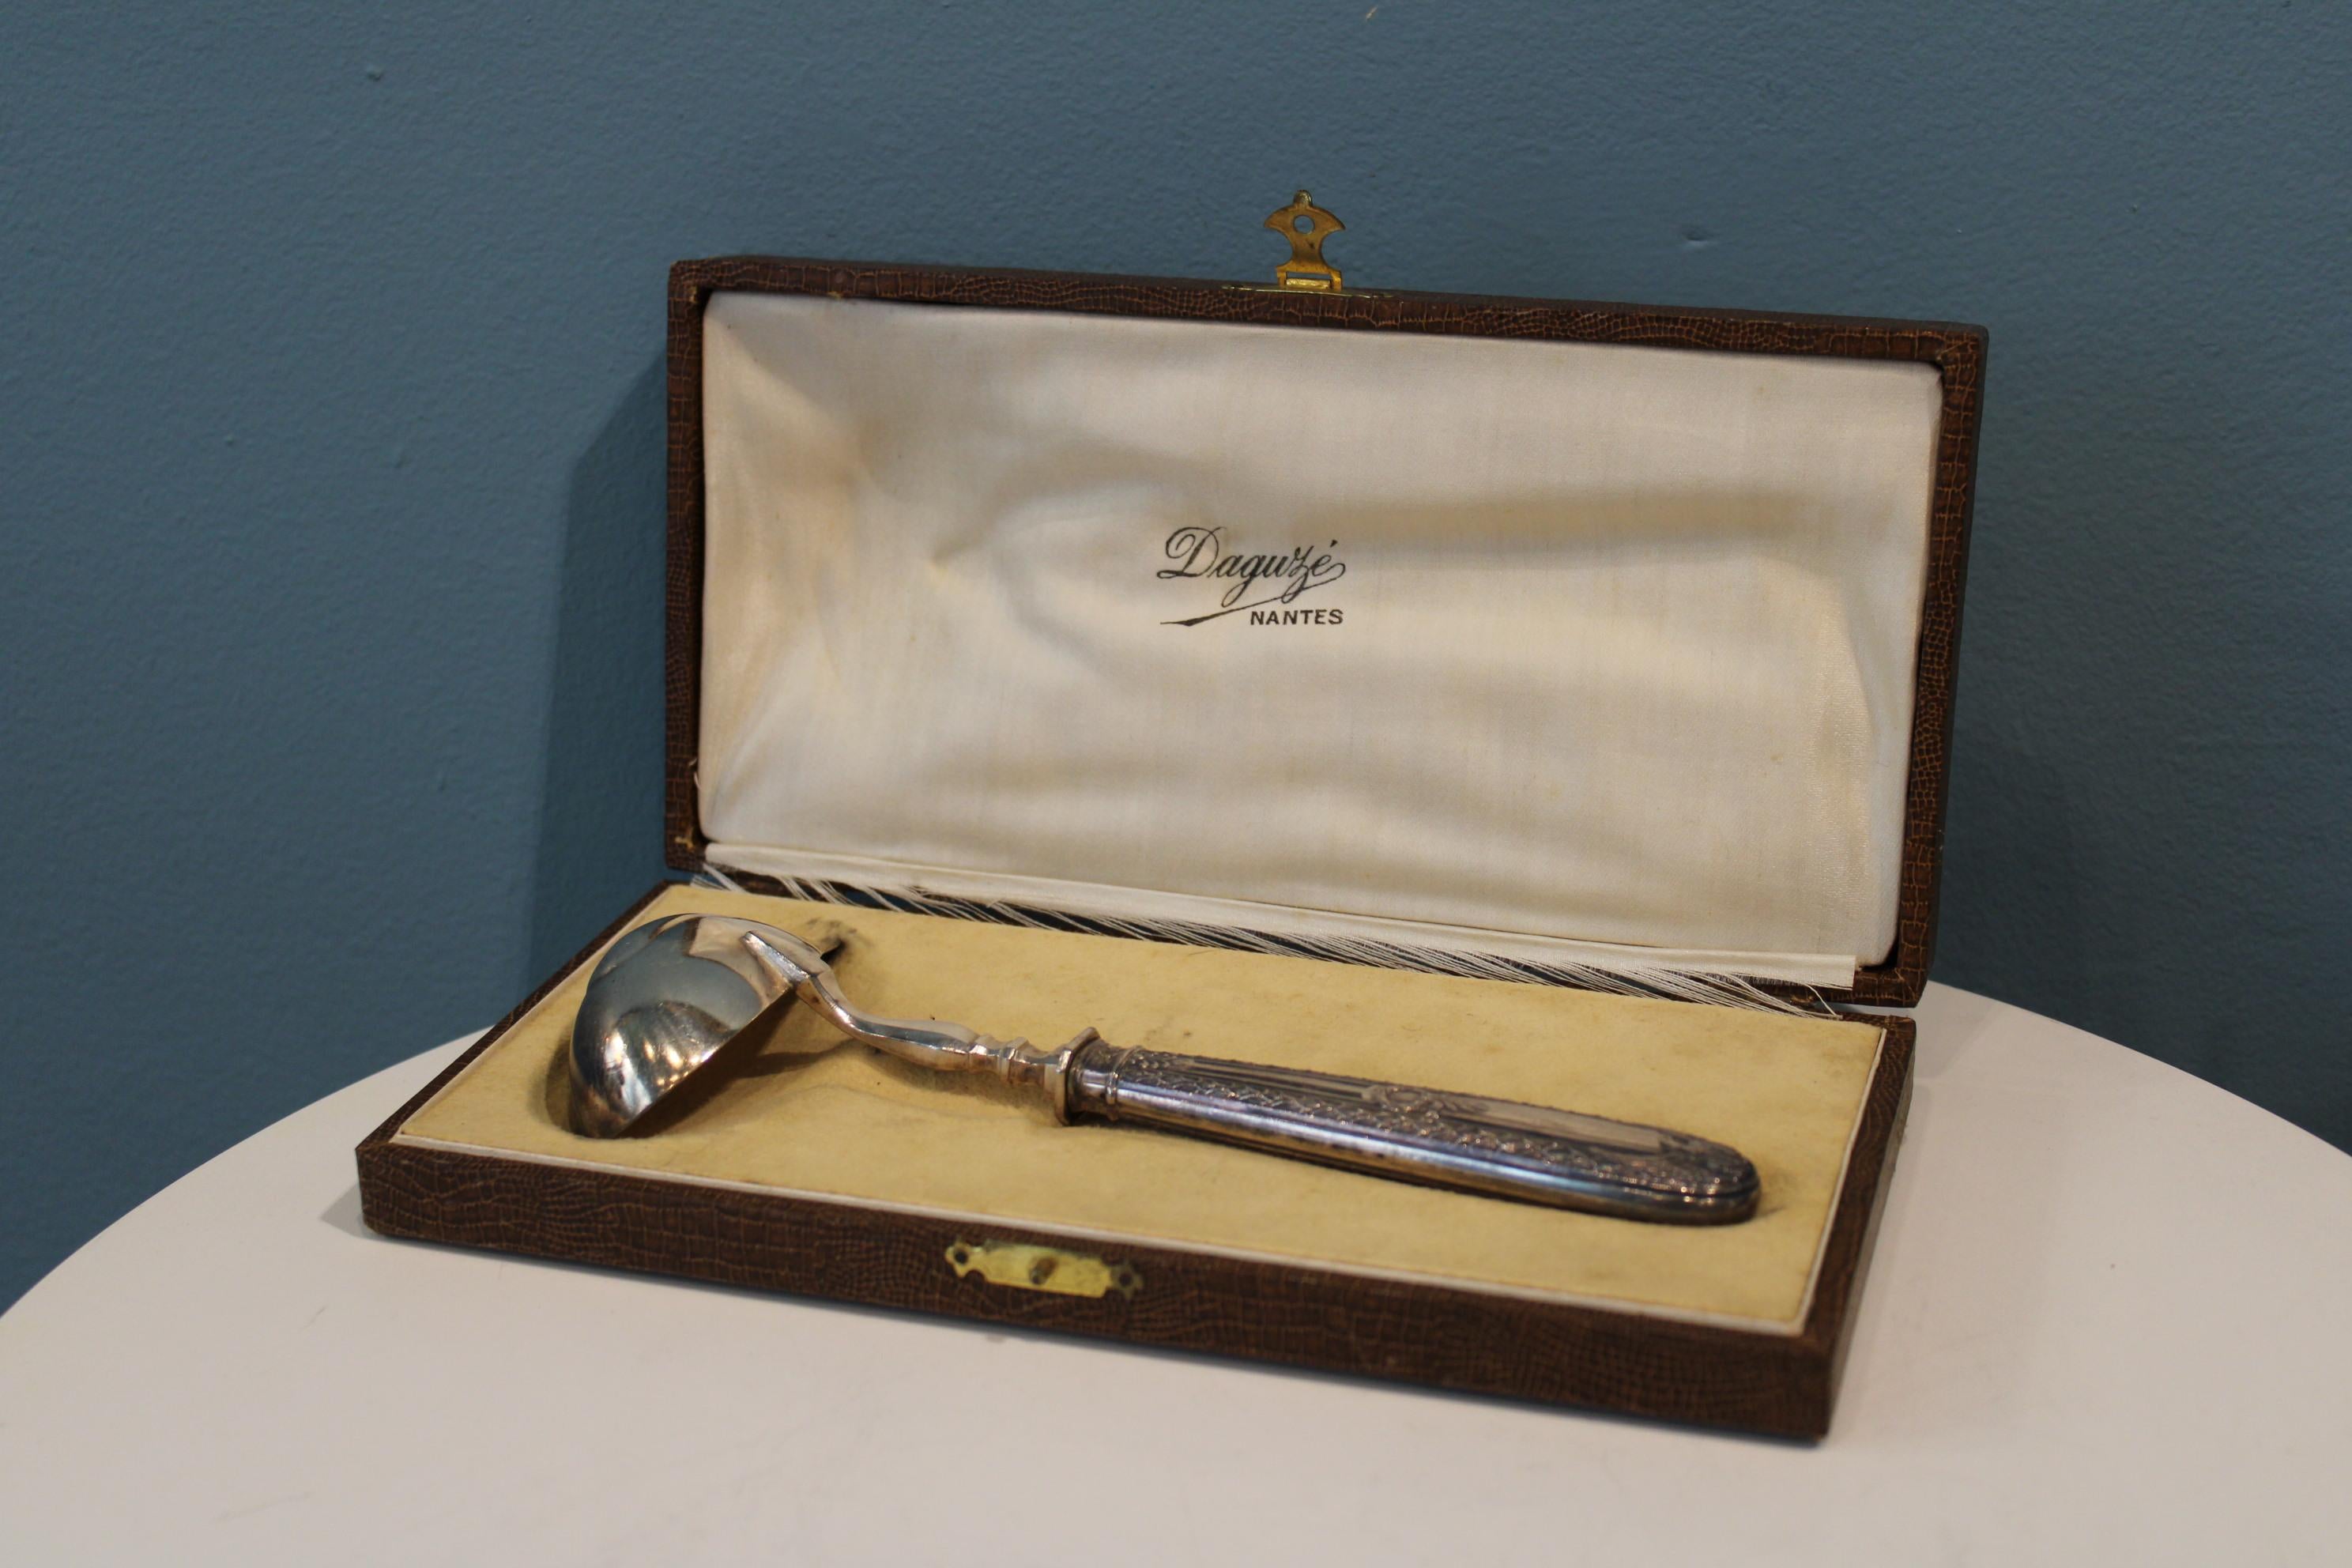 Silver metal gravy spoon in her box

Spoon dimensions : 20 x 8.5 x 3.5 cm
Box dimensions : 24 x 12 x 4.5 cm